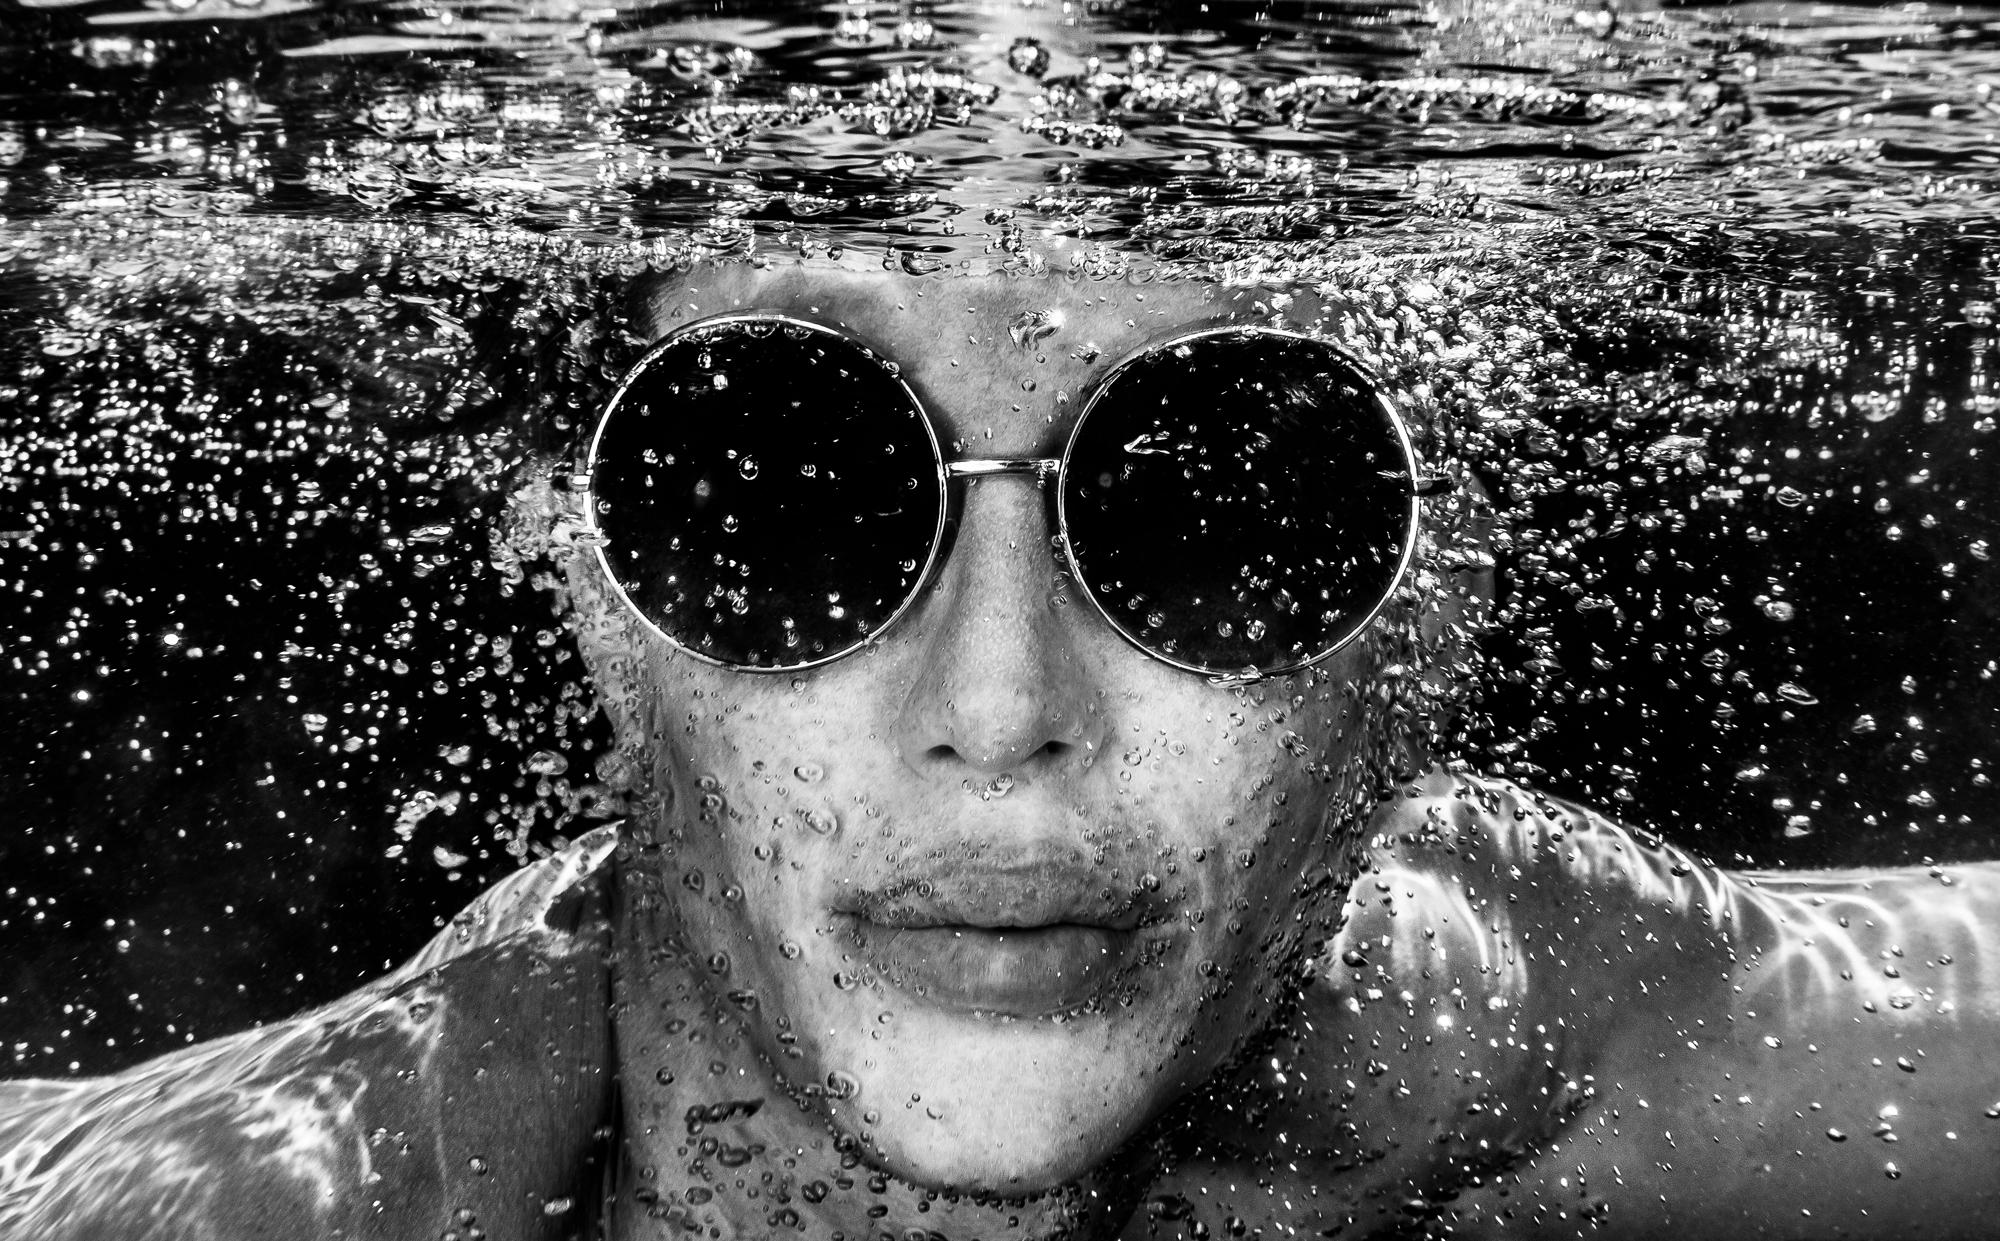 Alex Sher Portrait Photograph - Rounds  - underwater black and white photograph - archival pigment print